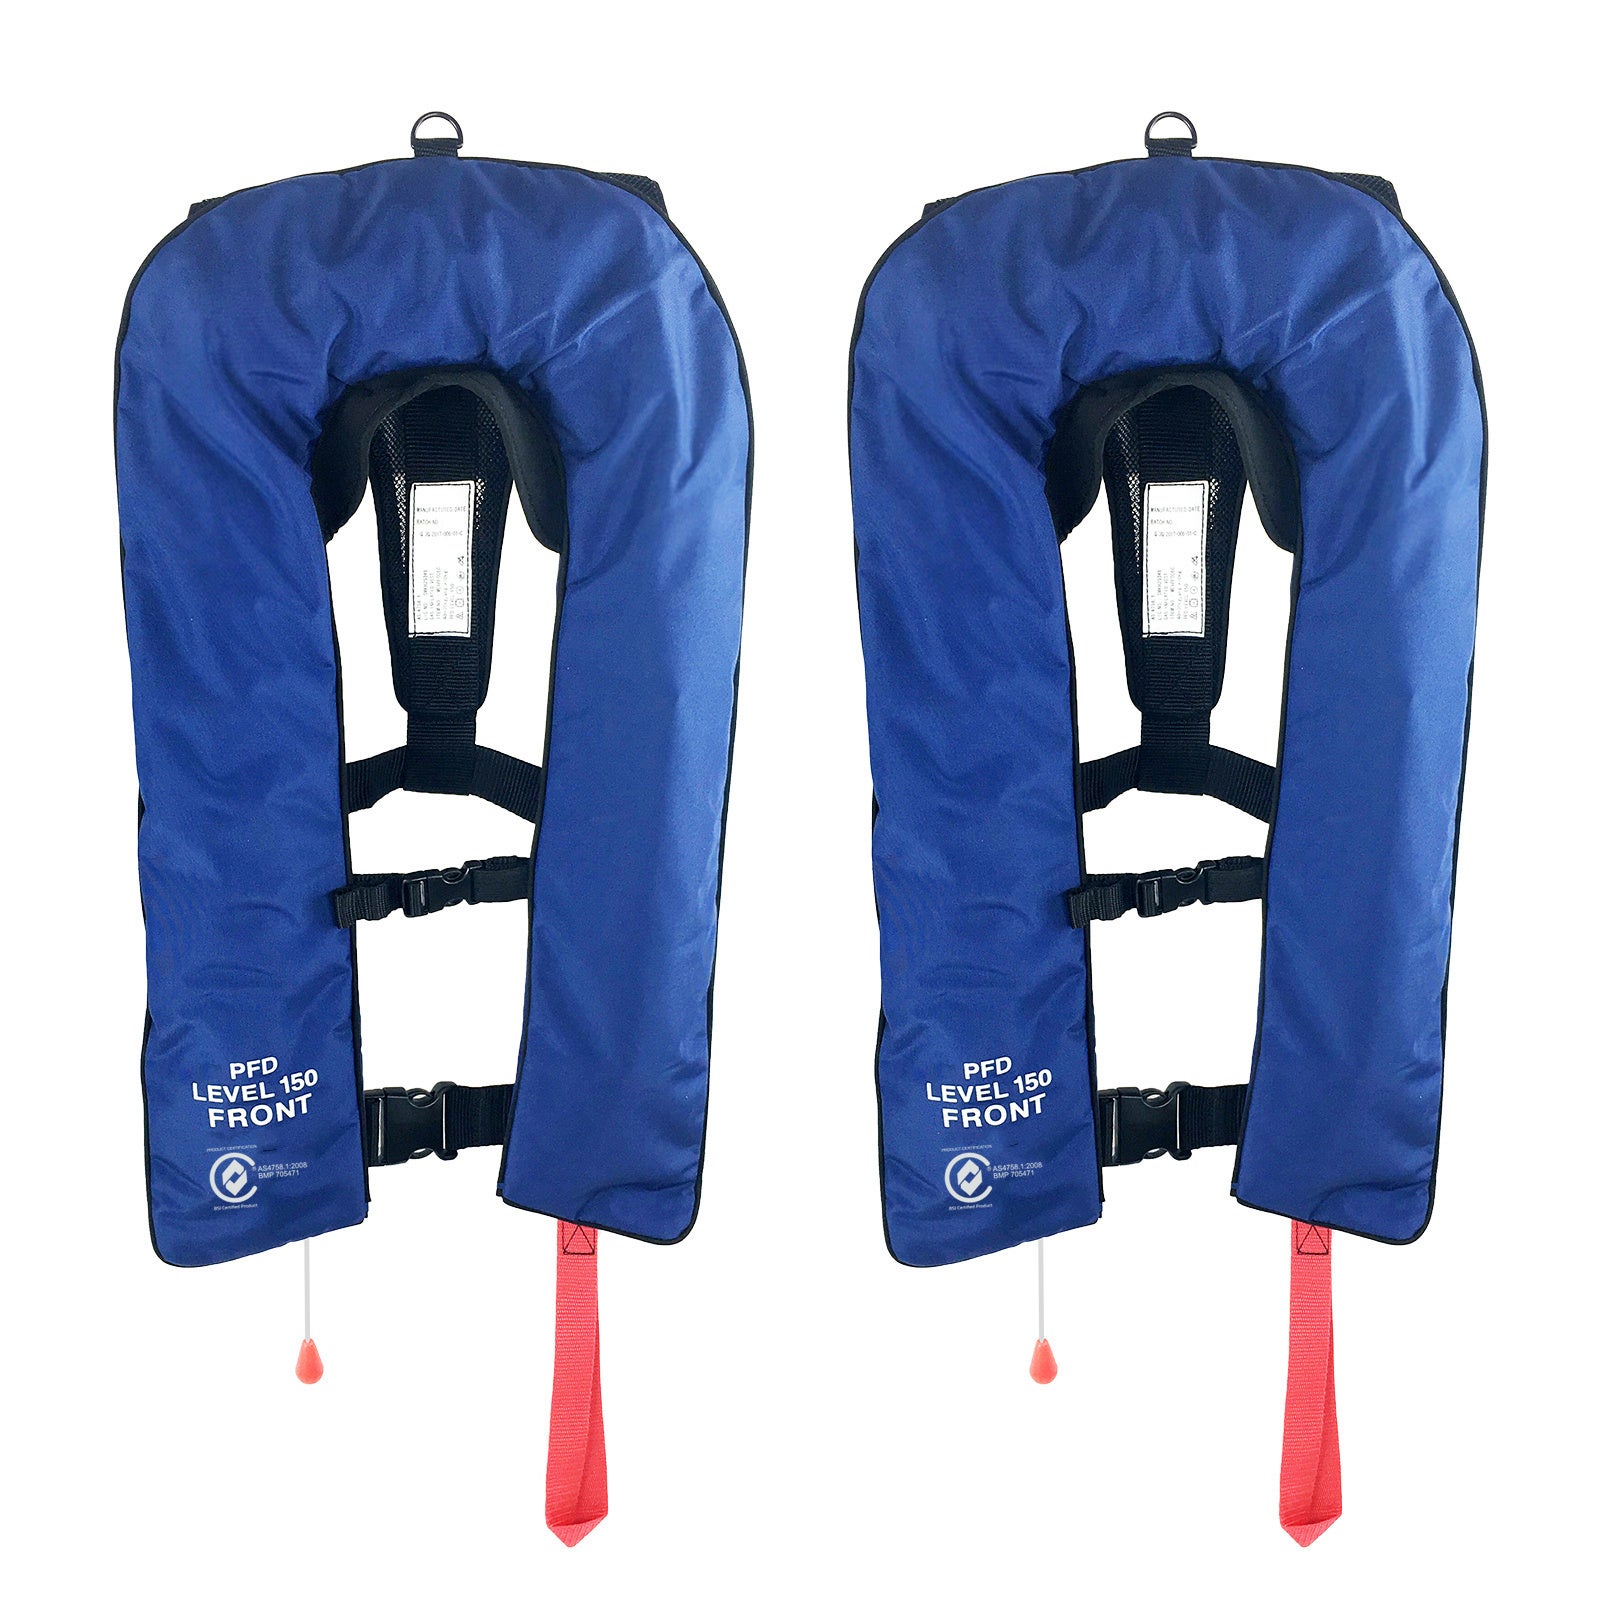 2pcs ADULT Inflatable Life Jacket PFD Type 1 Yoke Manual LifeJackets Level 150N